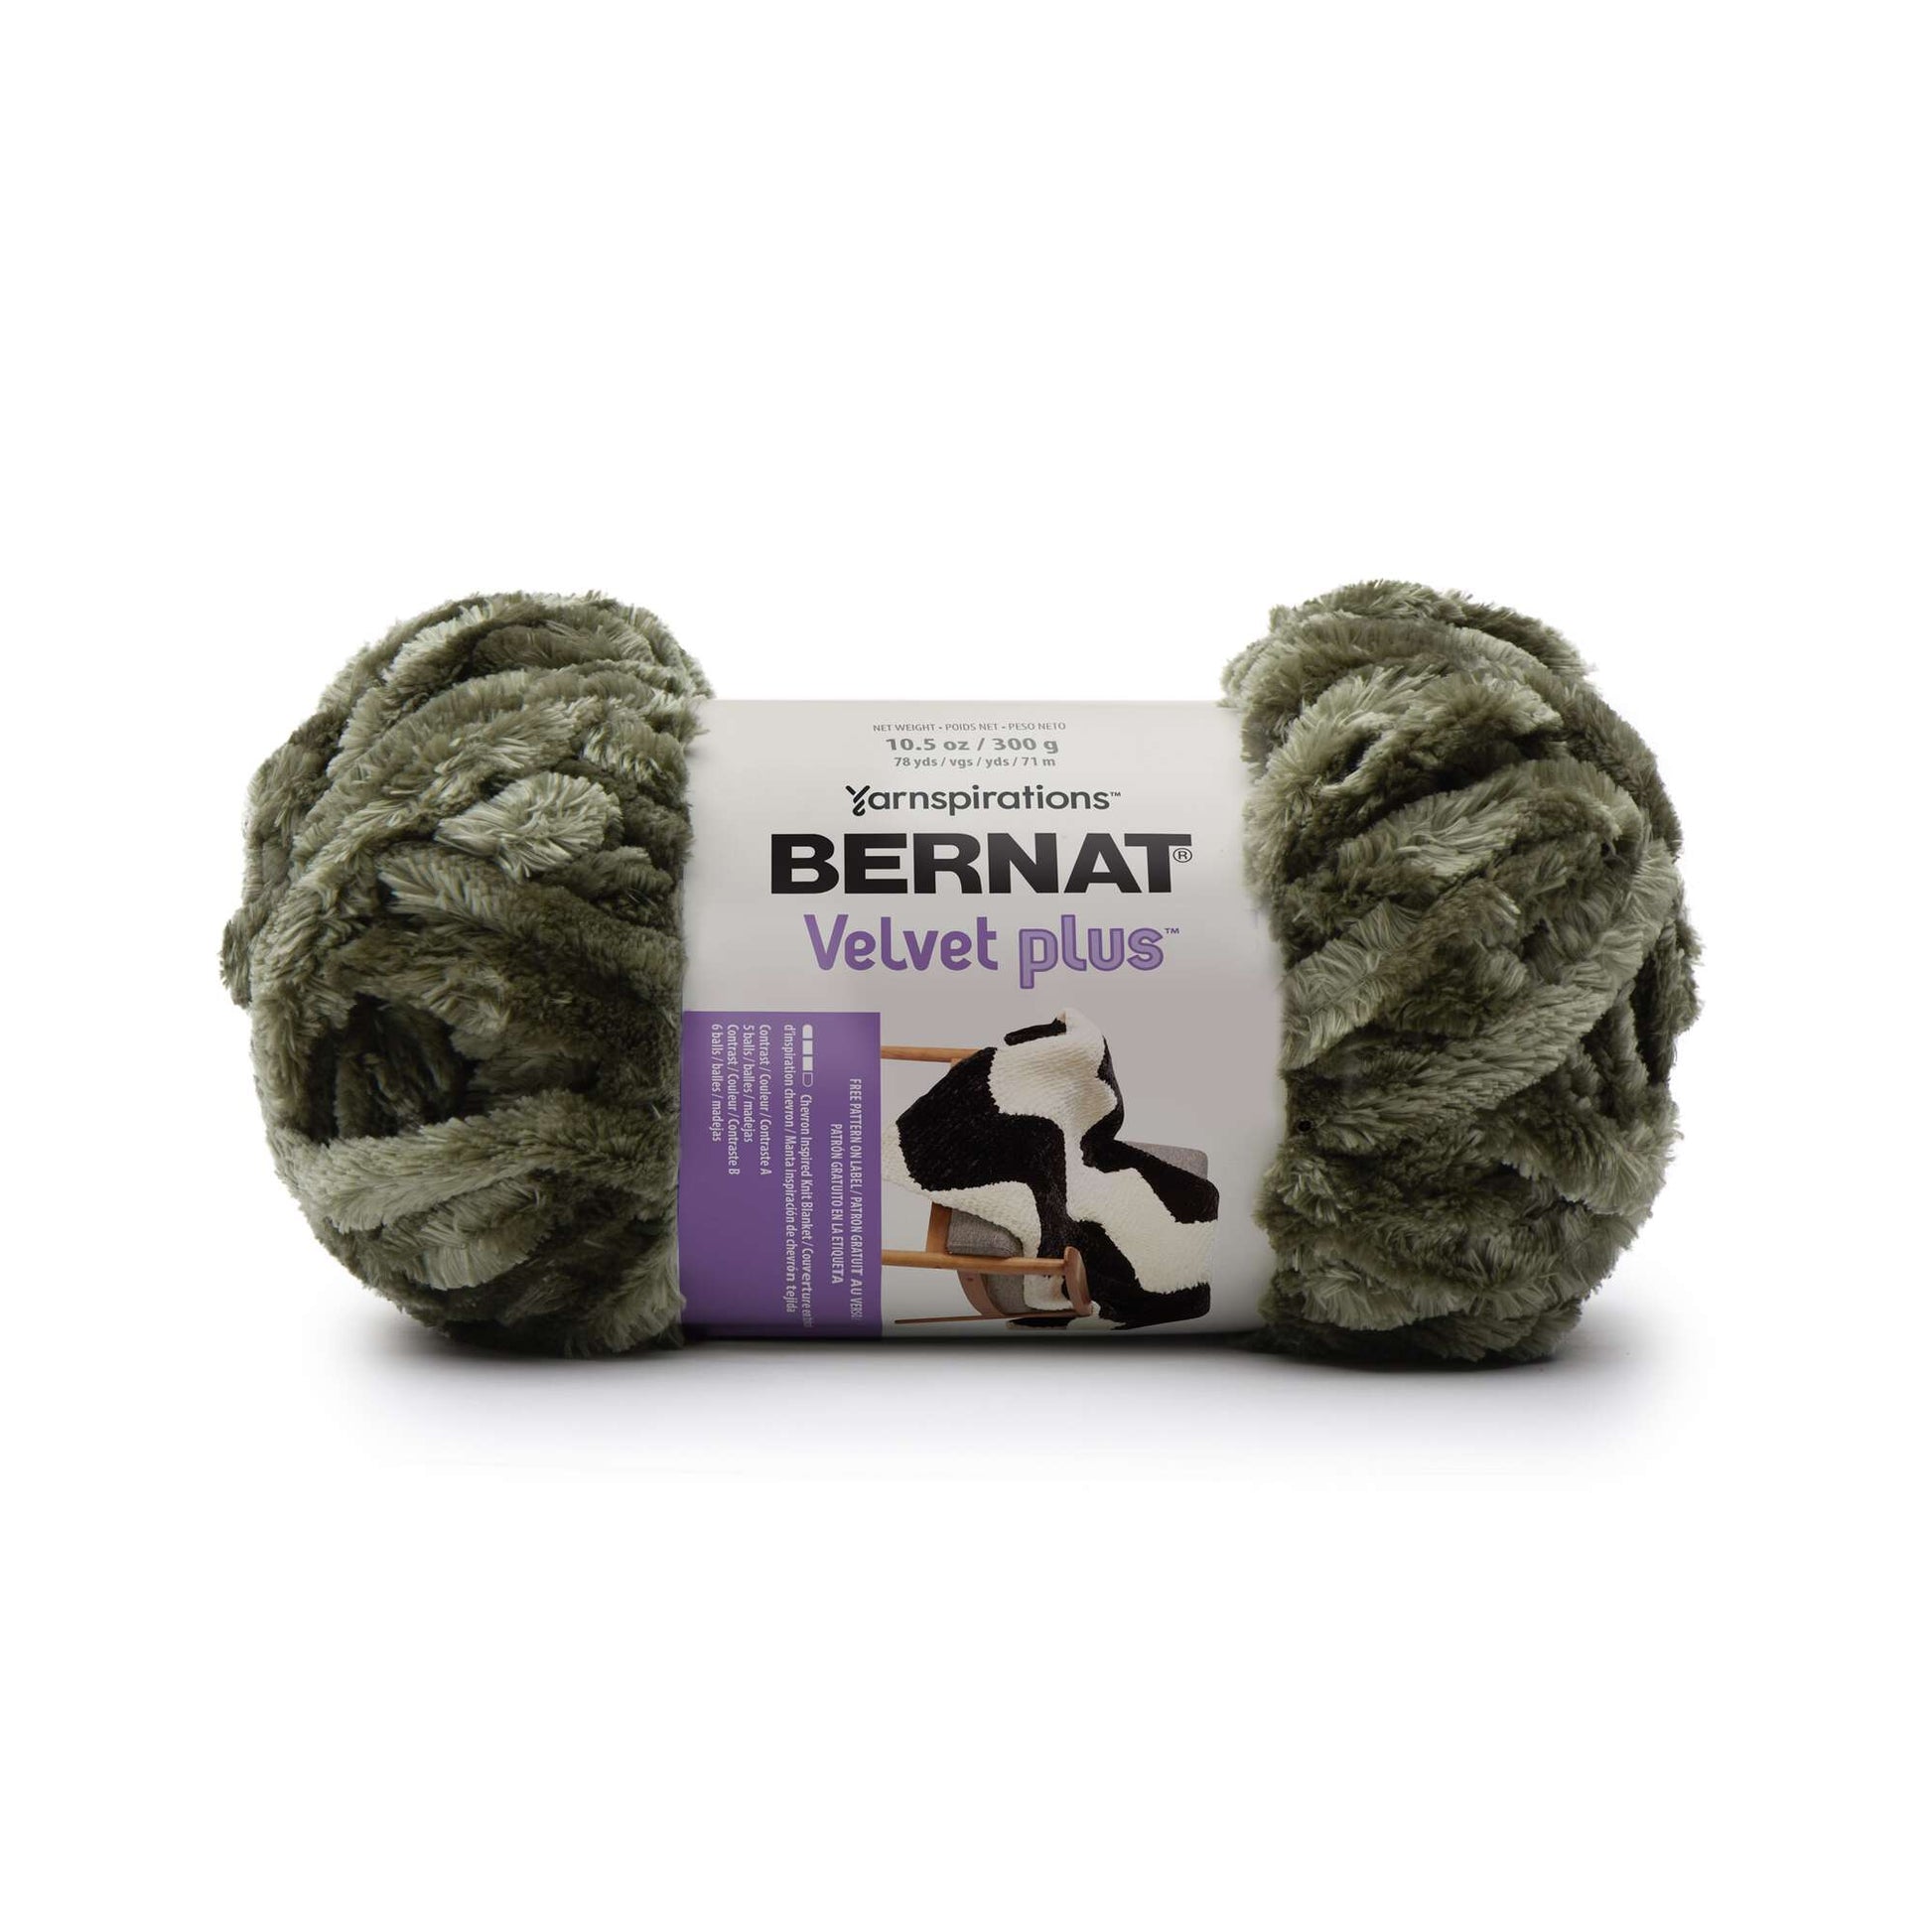 Bernat Velvet Plus Yarn - Clearance Shades*